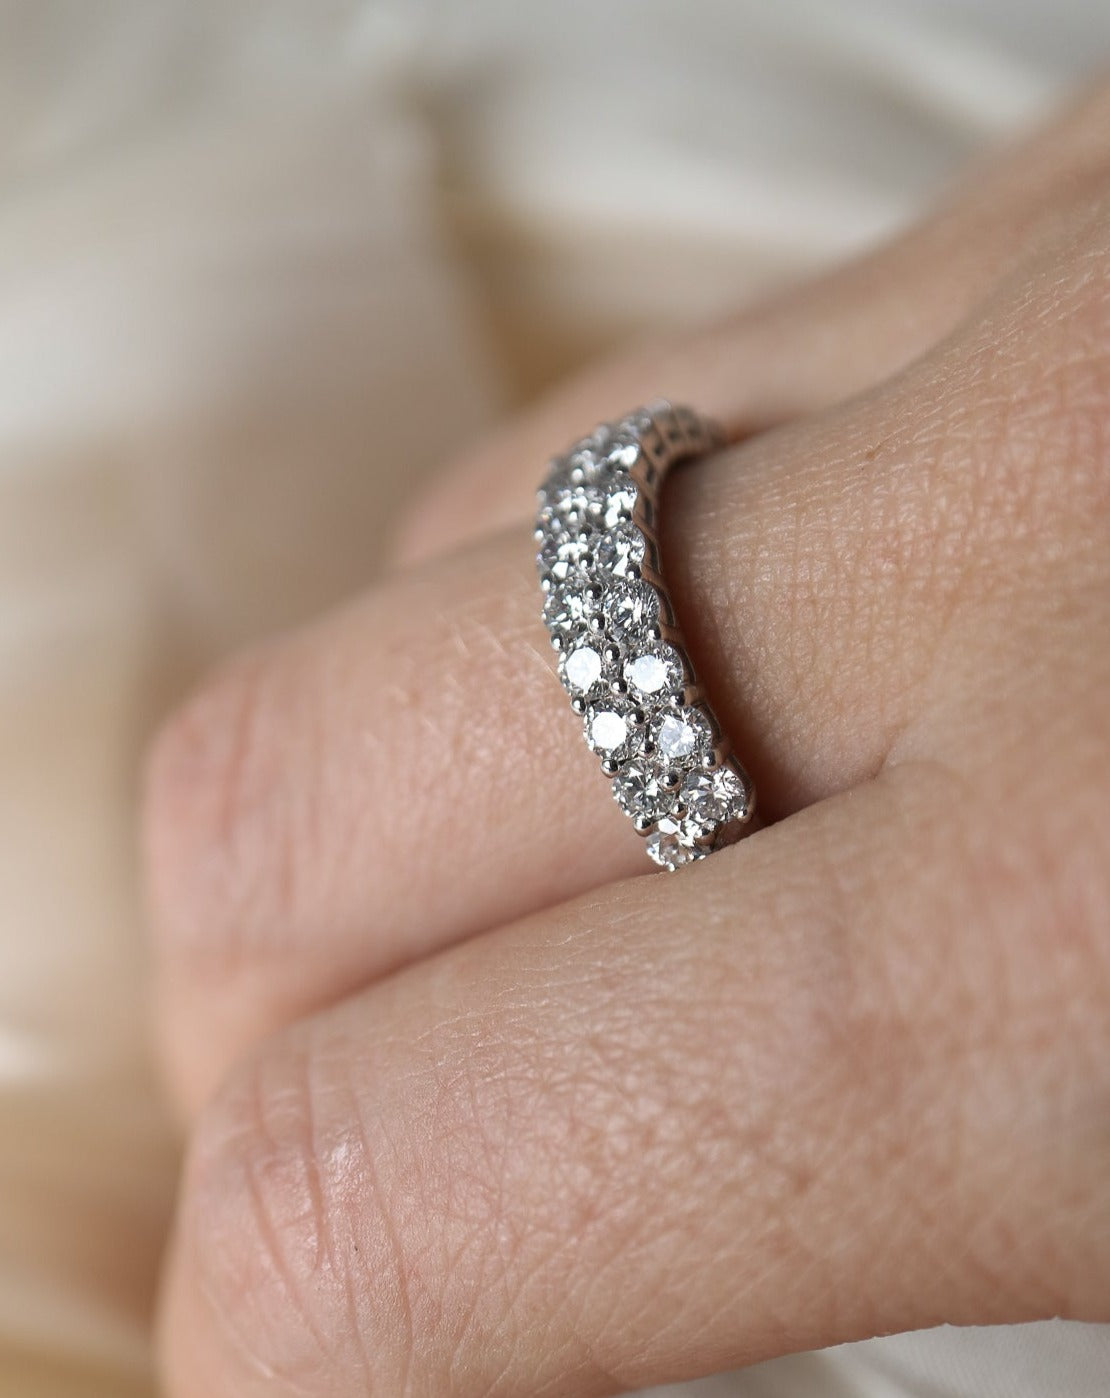 9ct gold lab grown diamond ring band engagement ring wedding band